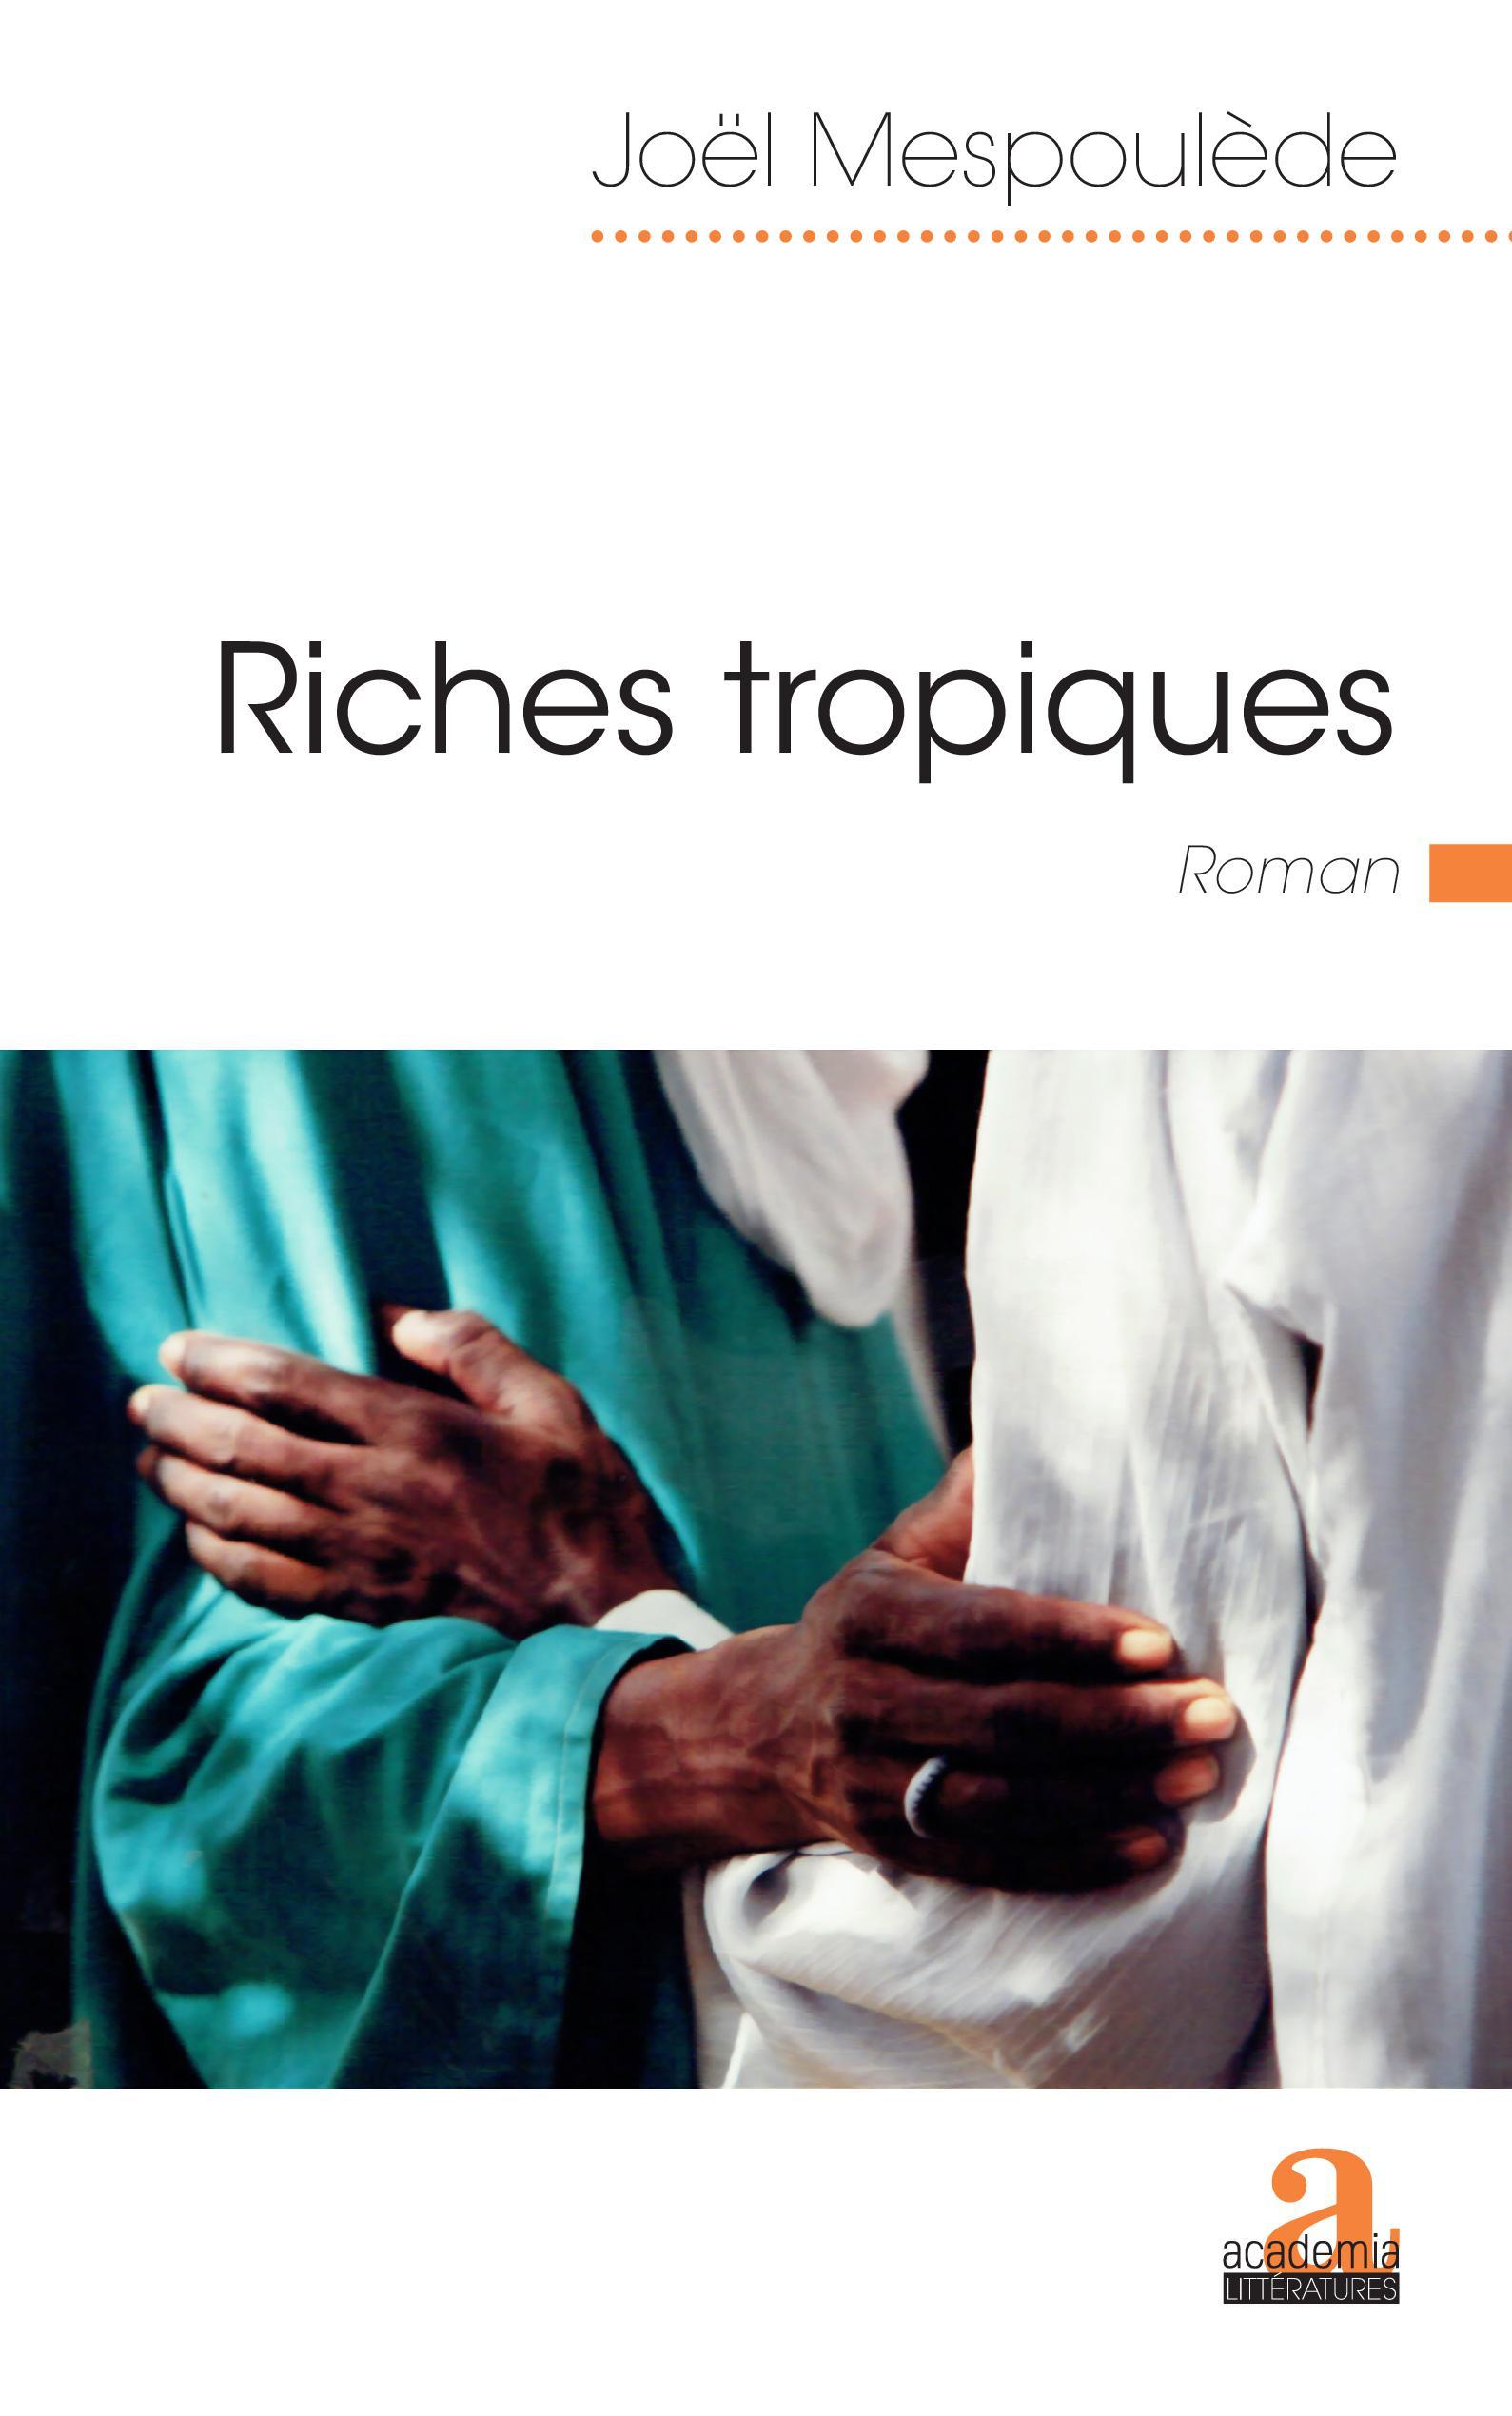 Riches tropiques (9782806105684-front-cover)